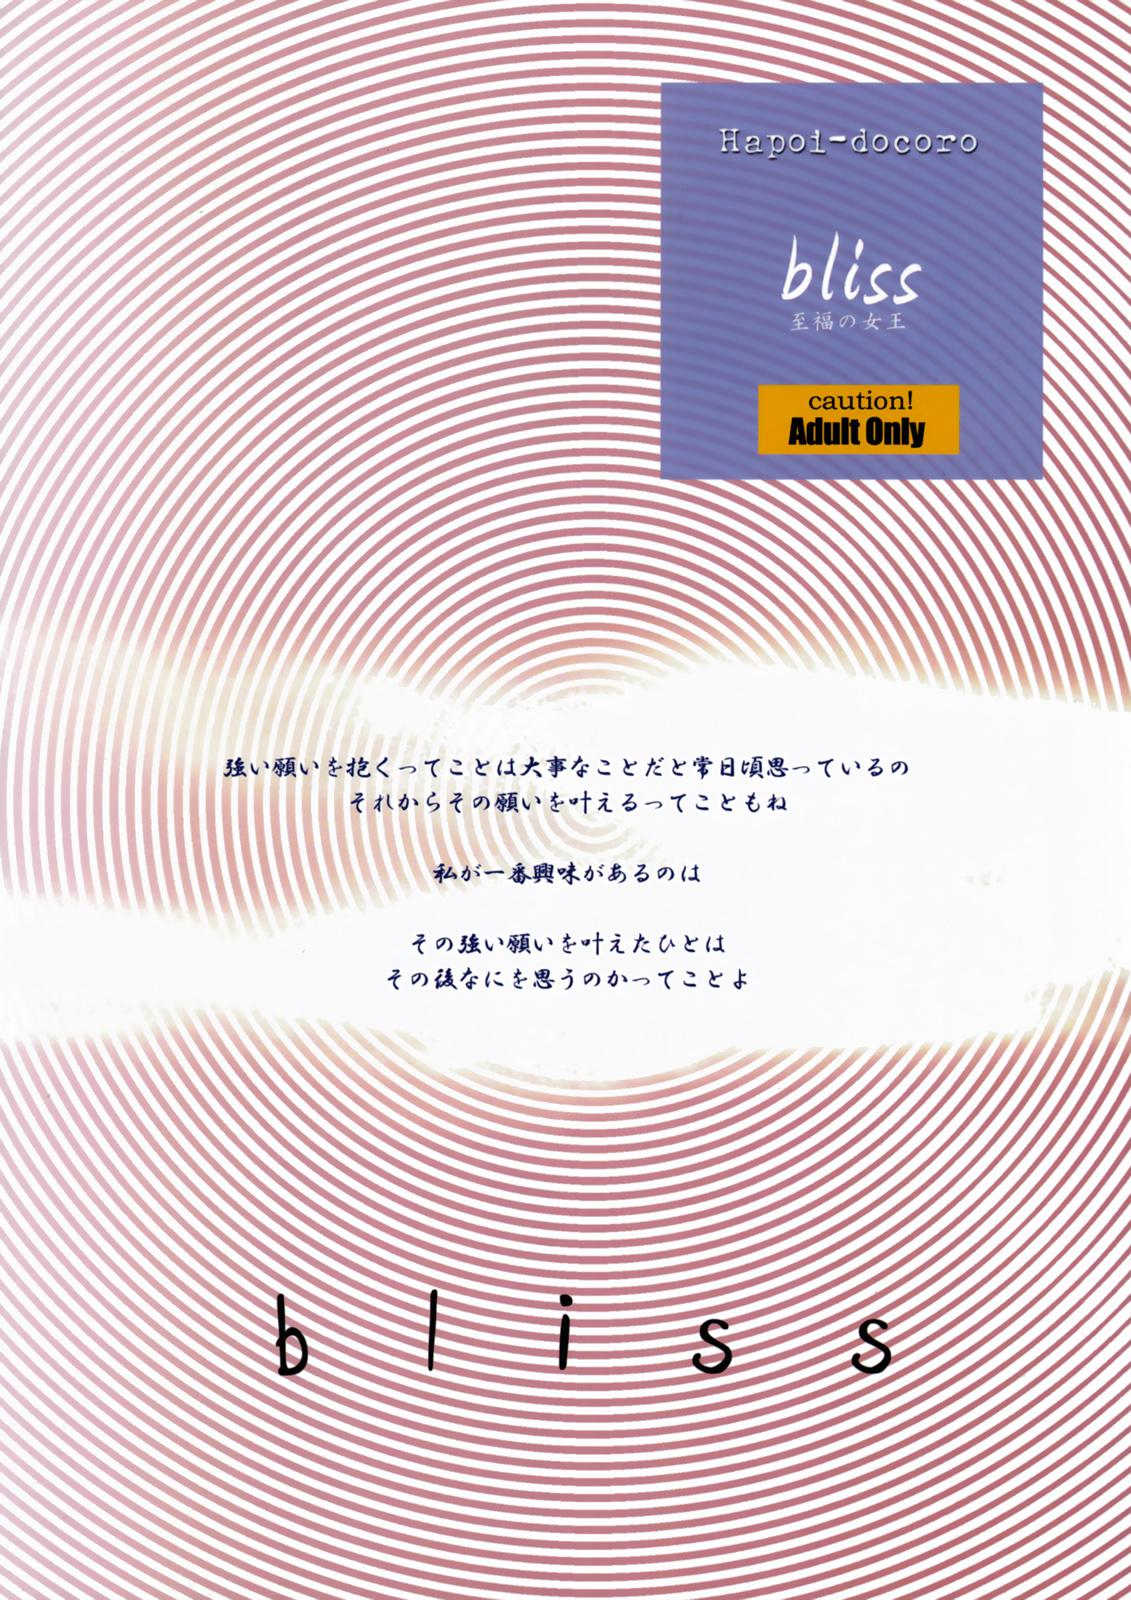 bliss 25